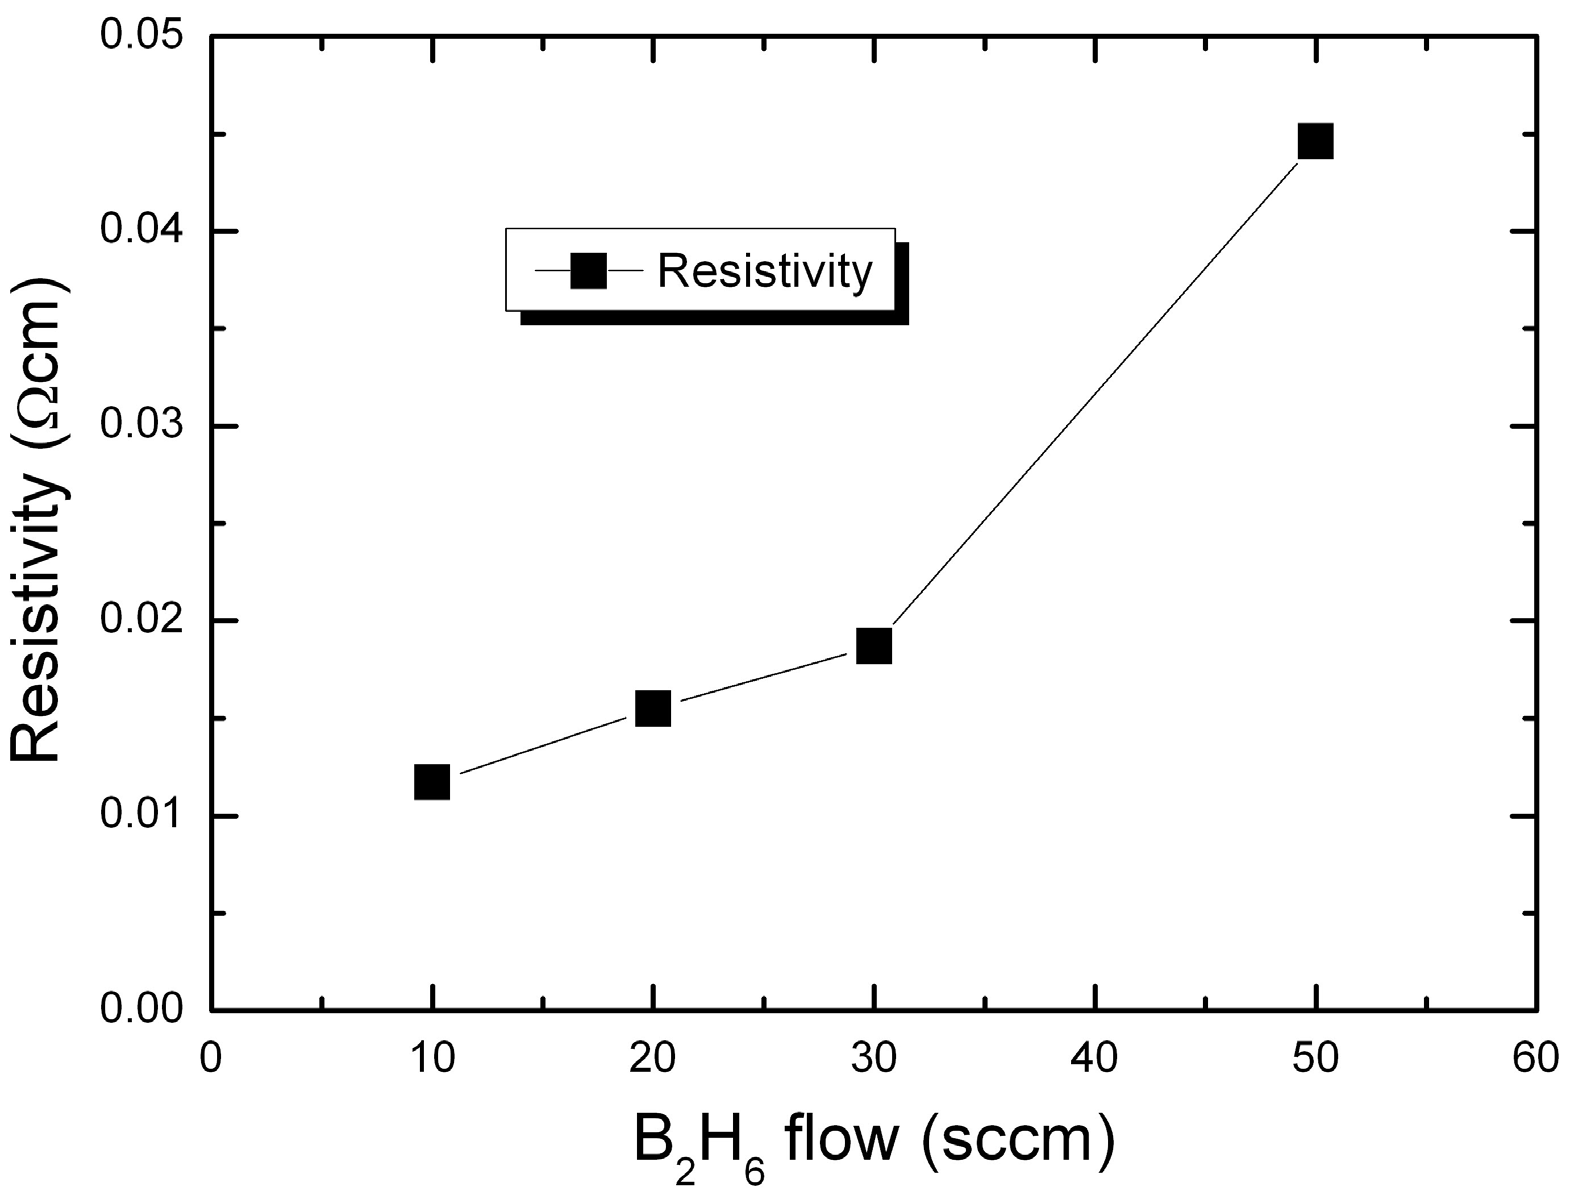 B2H6 flow (10-50 sccm)에 따른 ZnO:B 박막의 비저항 특성